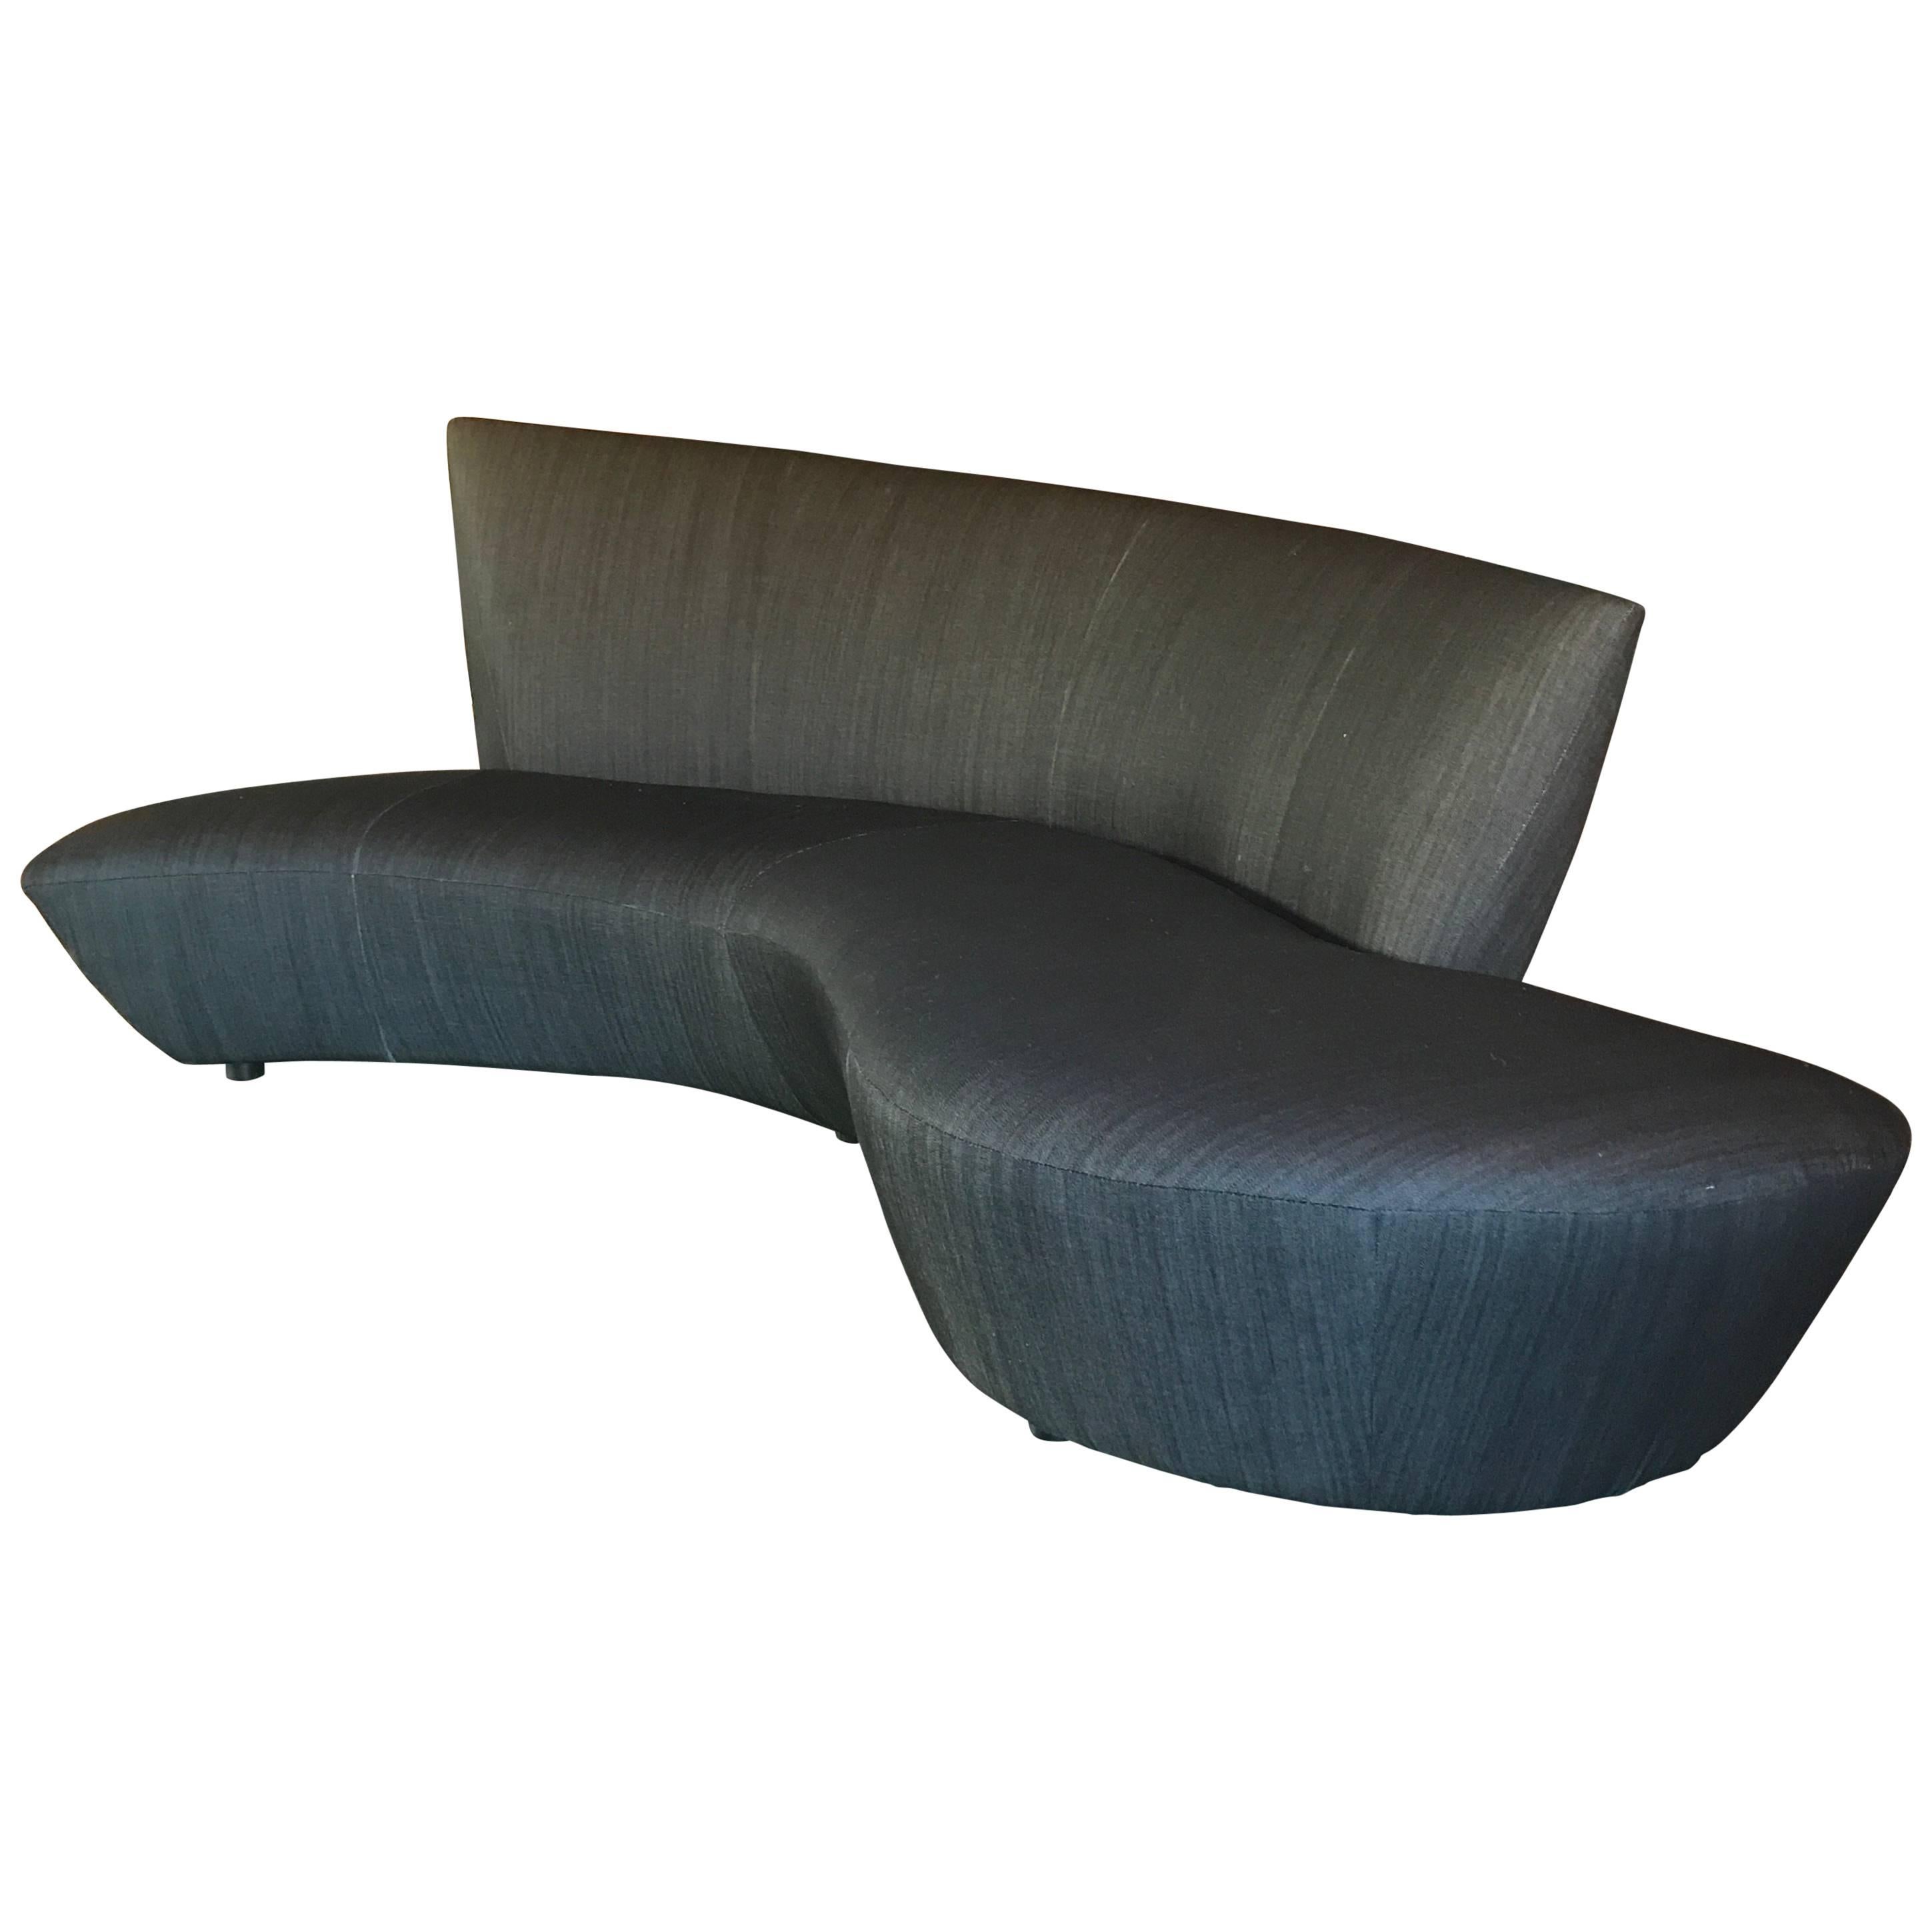 Vladimir Kagan Bilbao Serpentine Curved Sofa